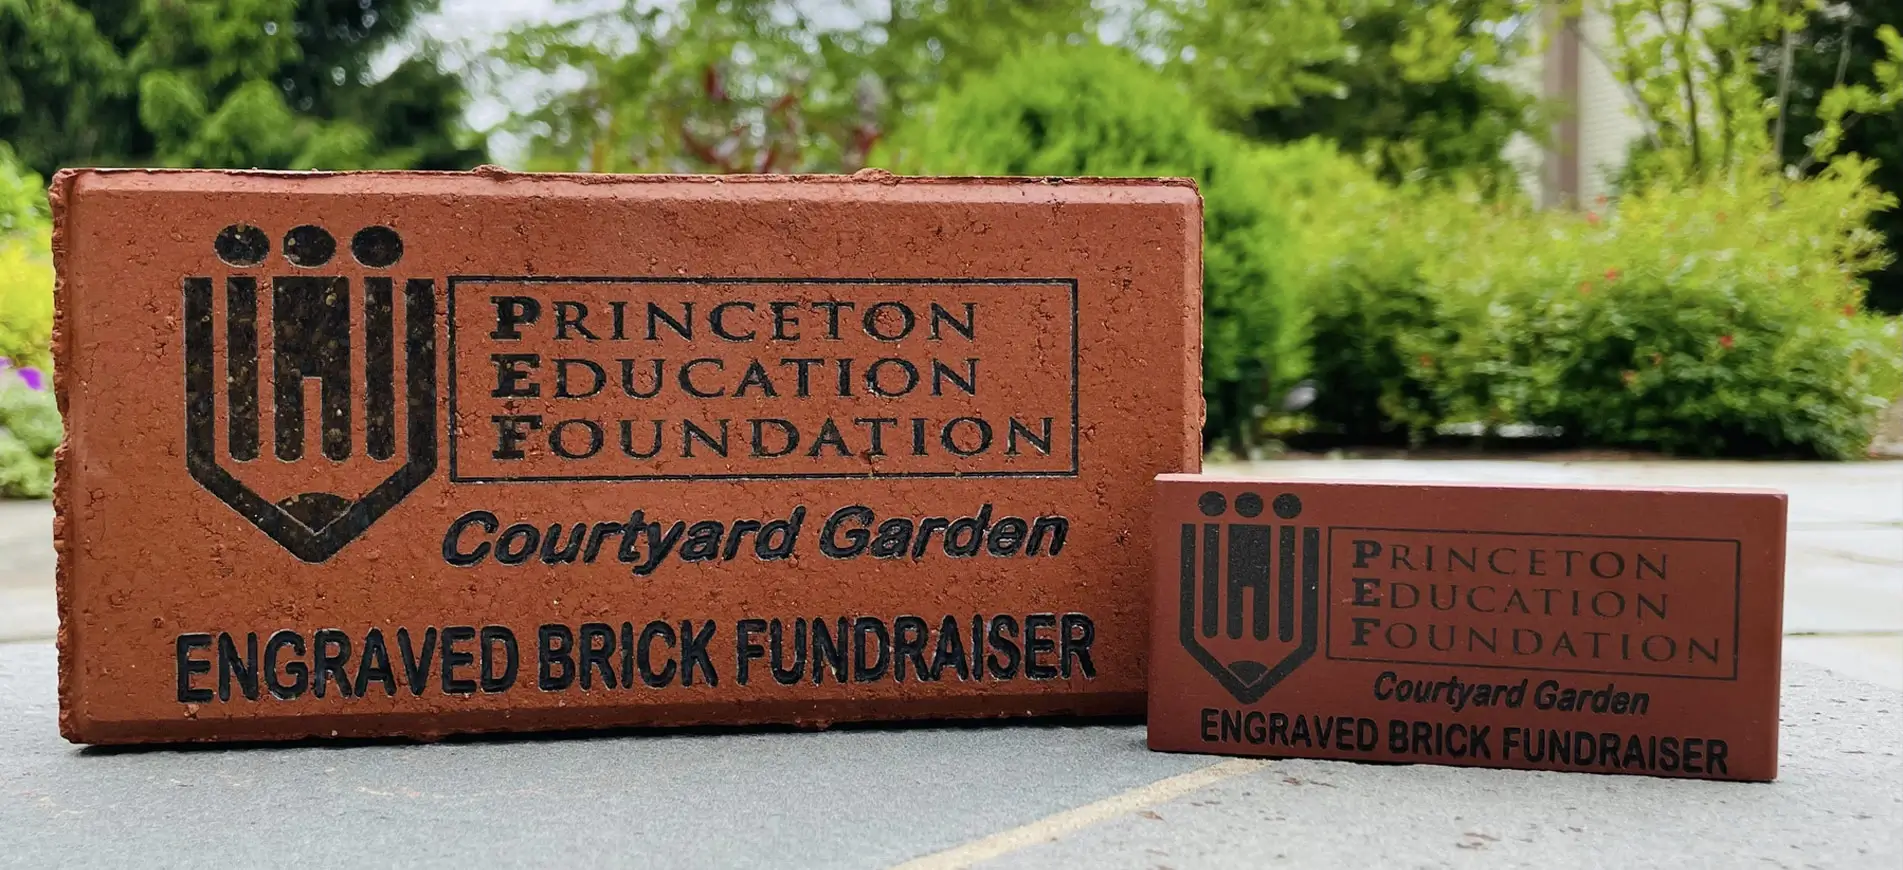 Princeton education foundation